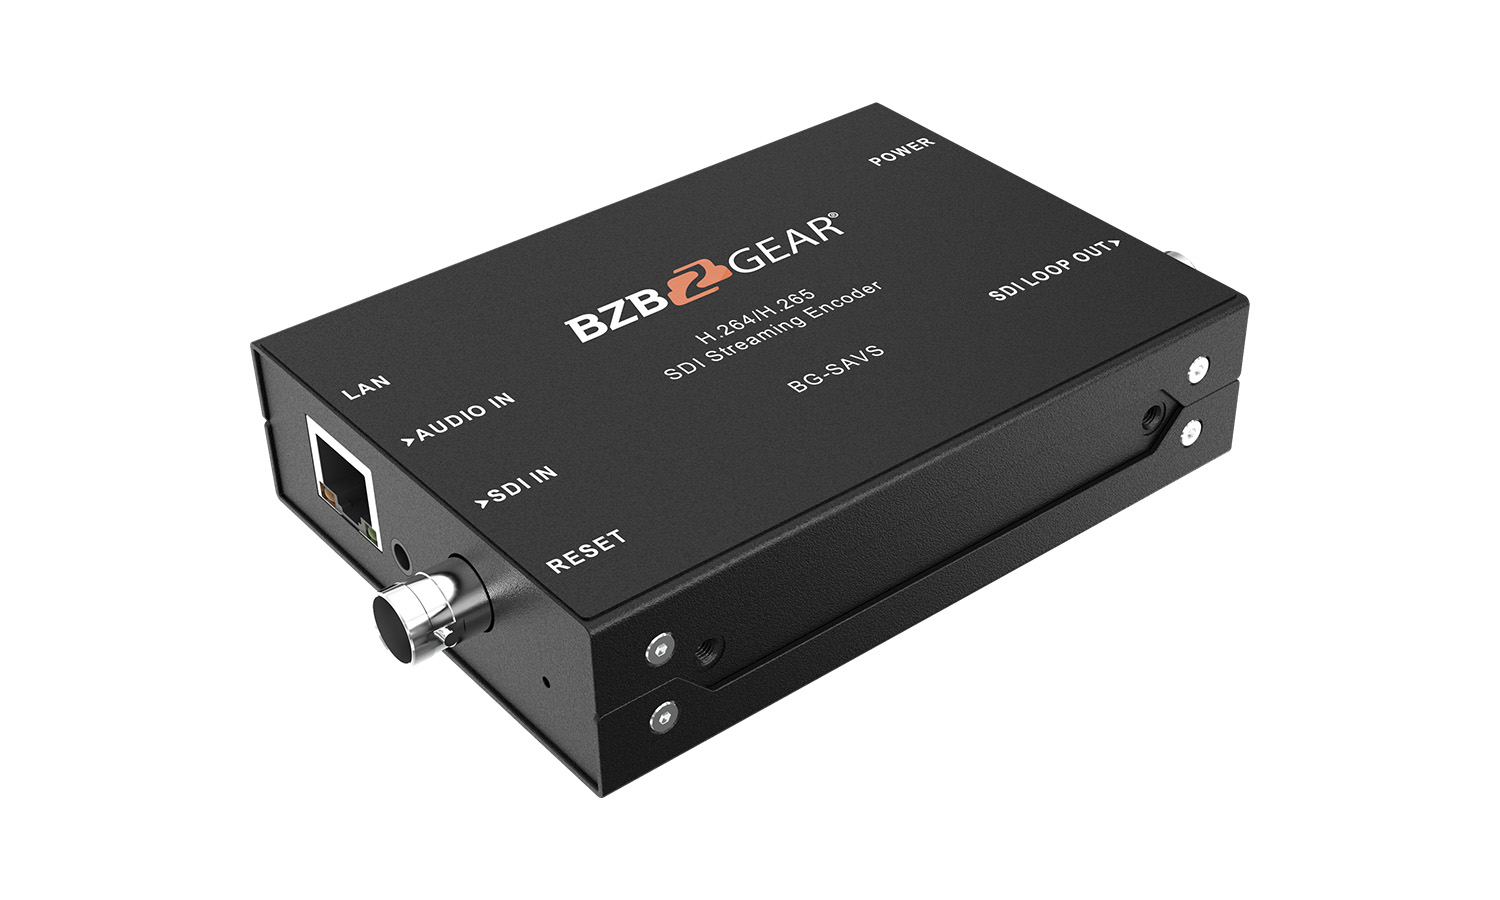 BG-SAVS 1080P FHD H.264/265 SDI Video and Audio Streaming Encoder by BZBGEAR